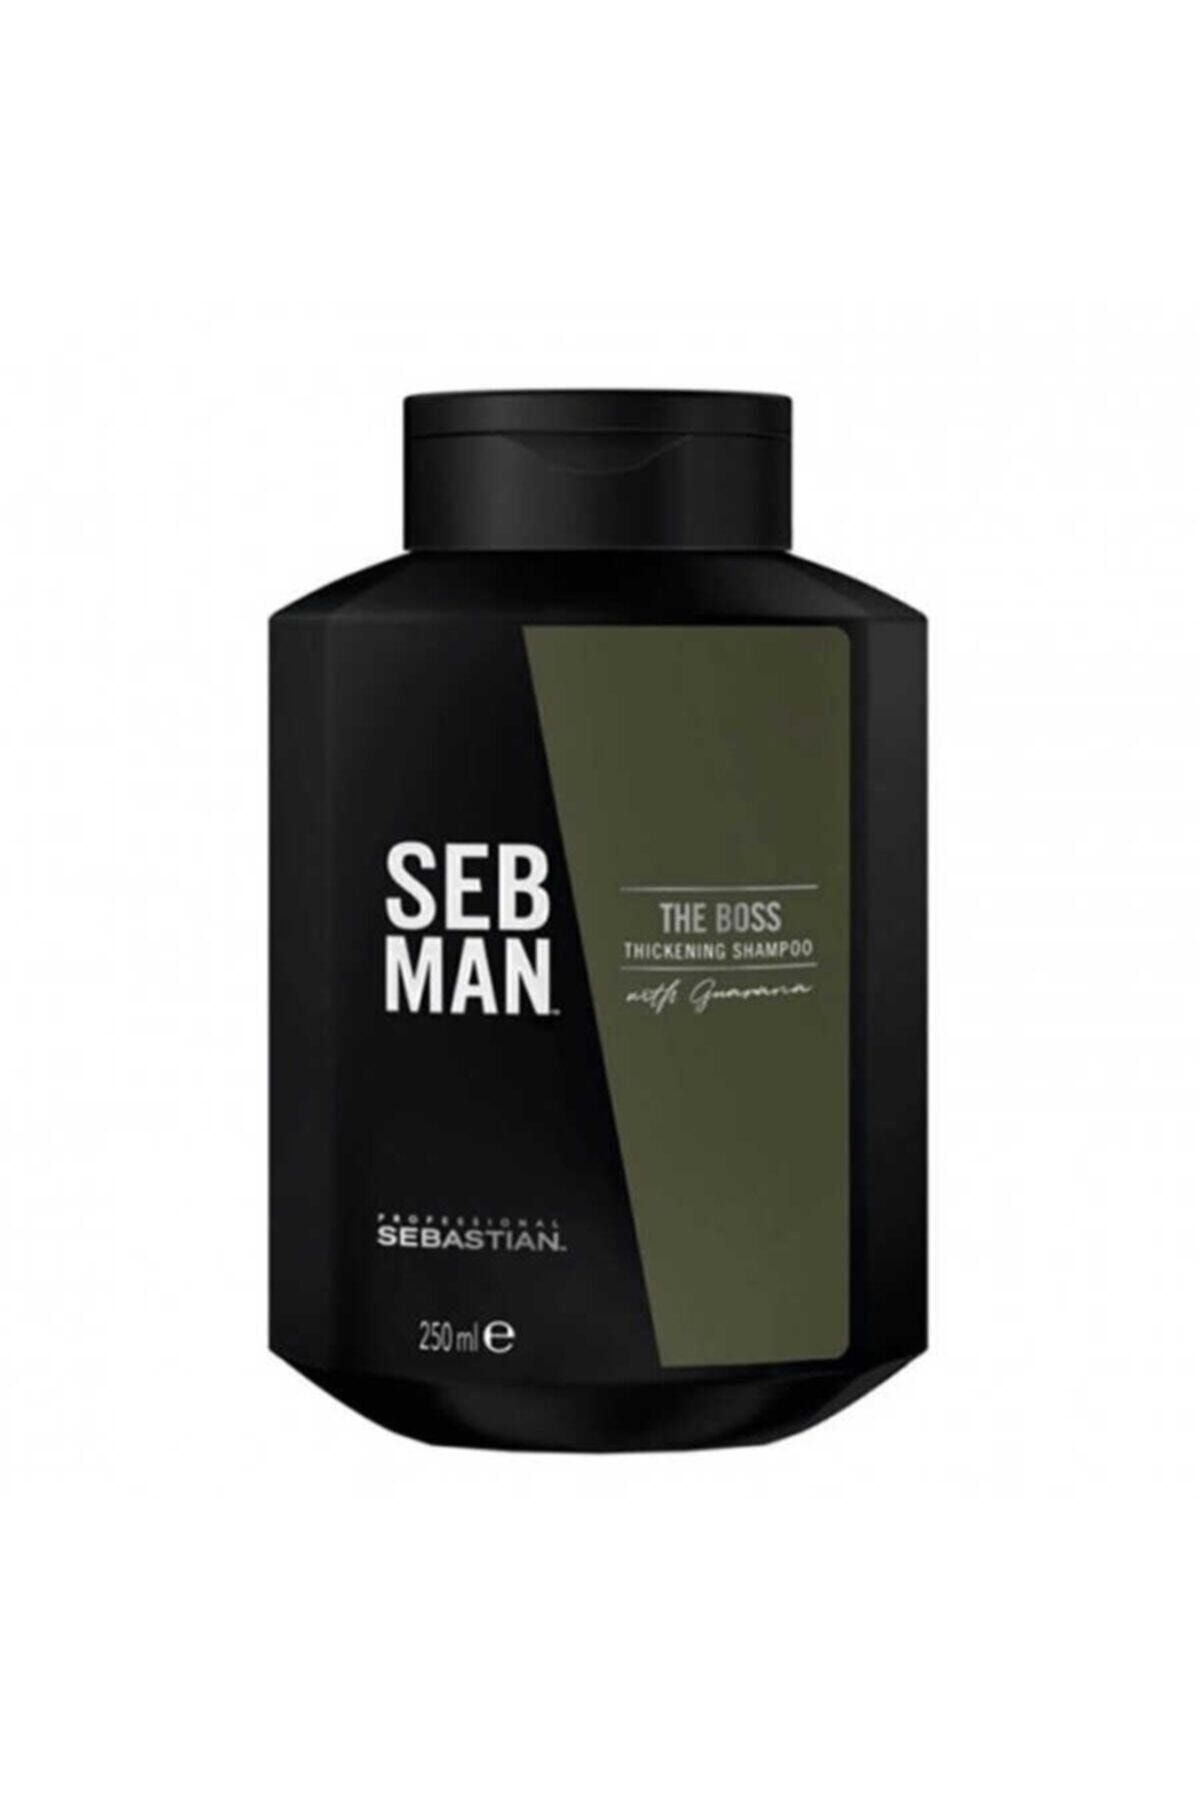 Sebastian KEY KUAFÖR Seb Man The Boss Hair Thickening Shampoo 250ml